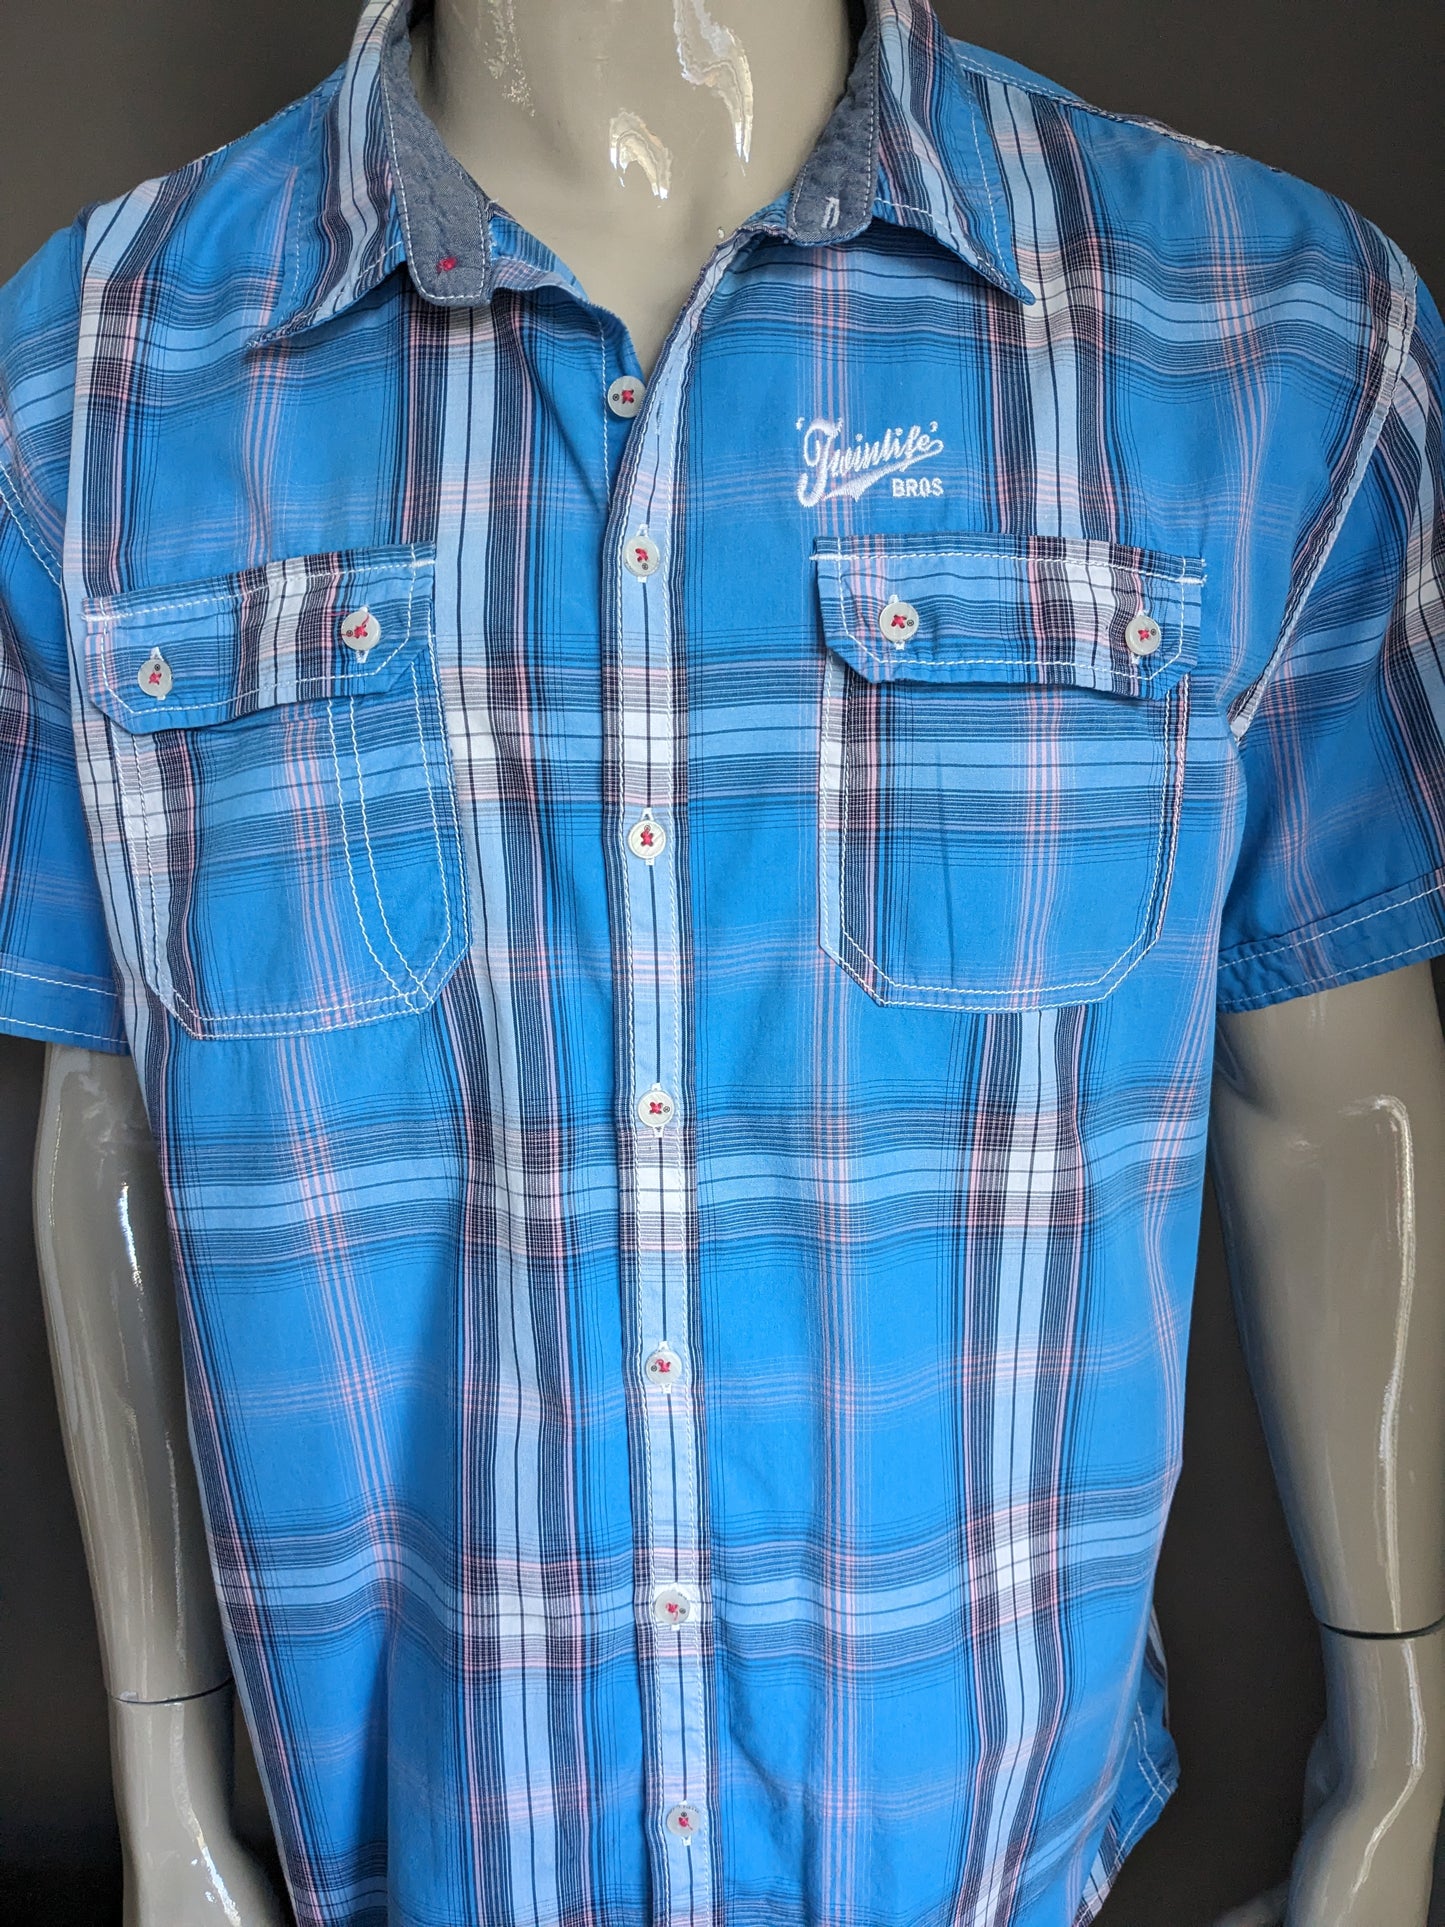 Twinlife shirt short sleeve. Blue pink white checkered. Size 4XL / XXXXL.